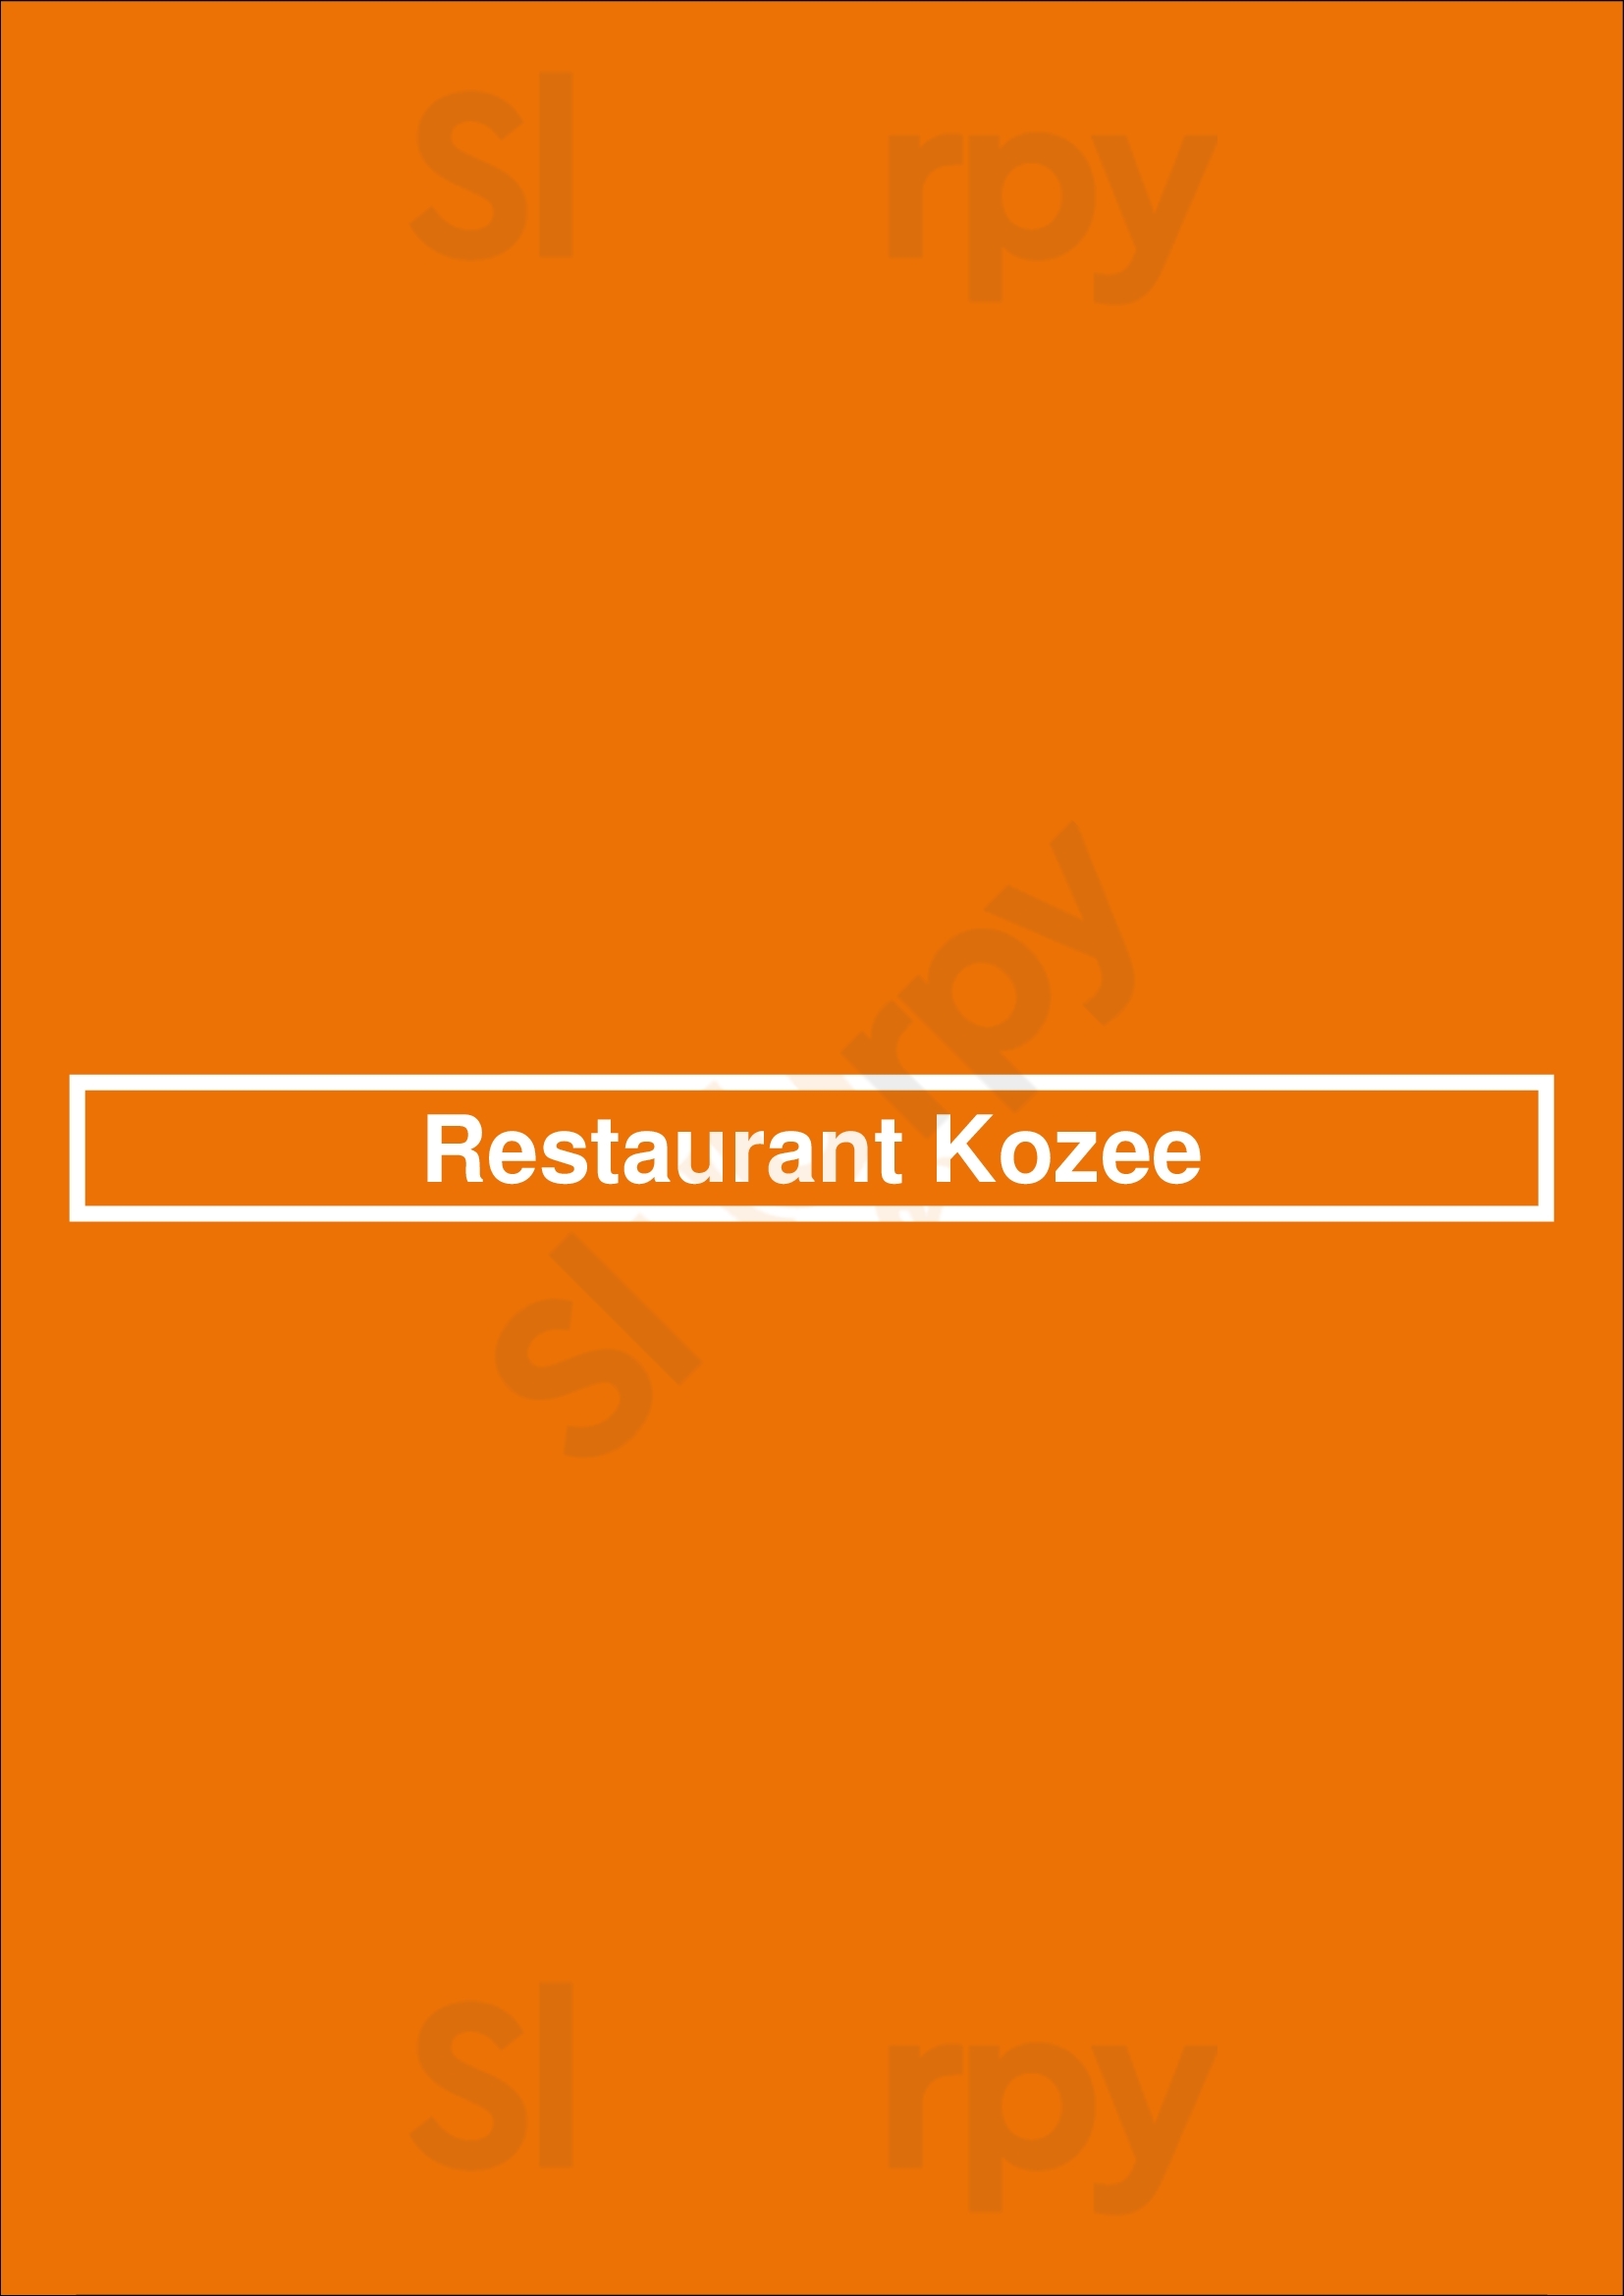 Restaurant Kozee Purmerend Menu - 1